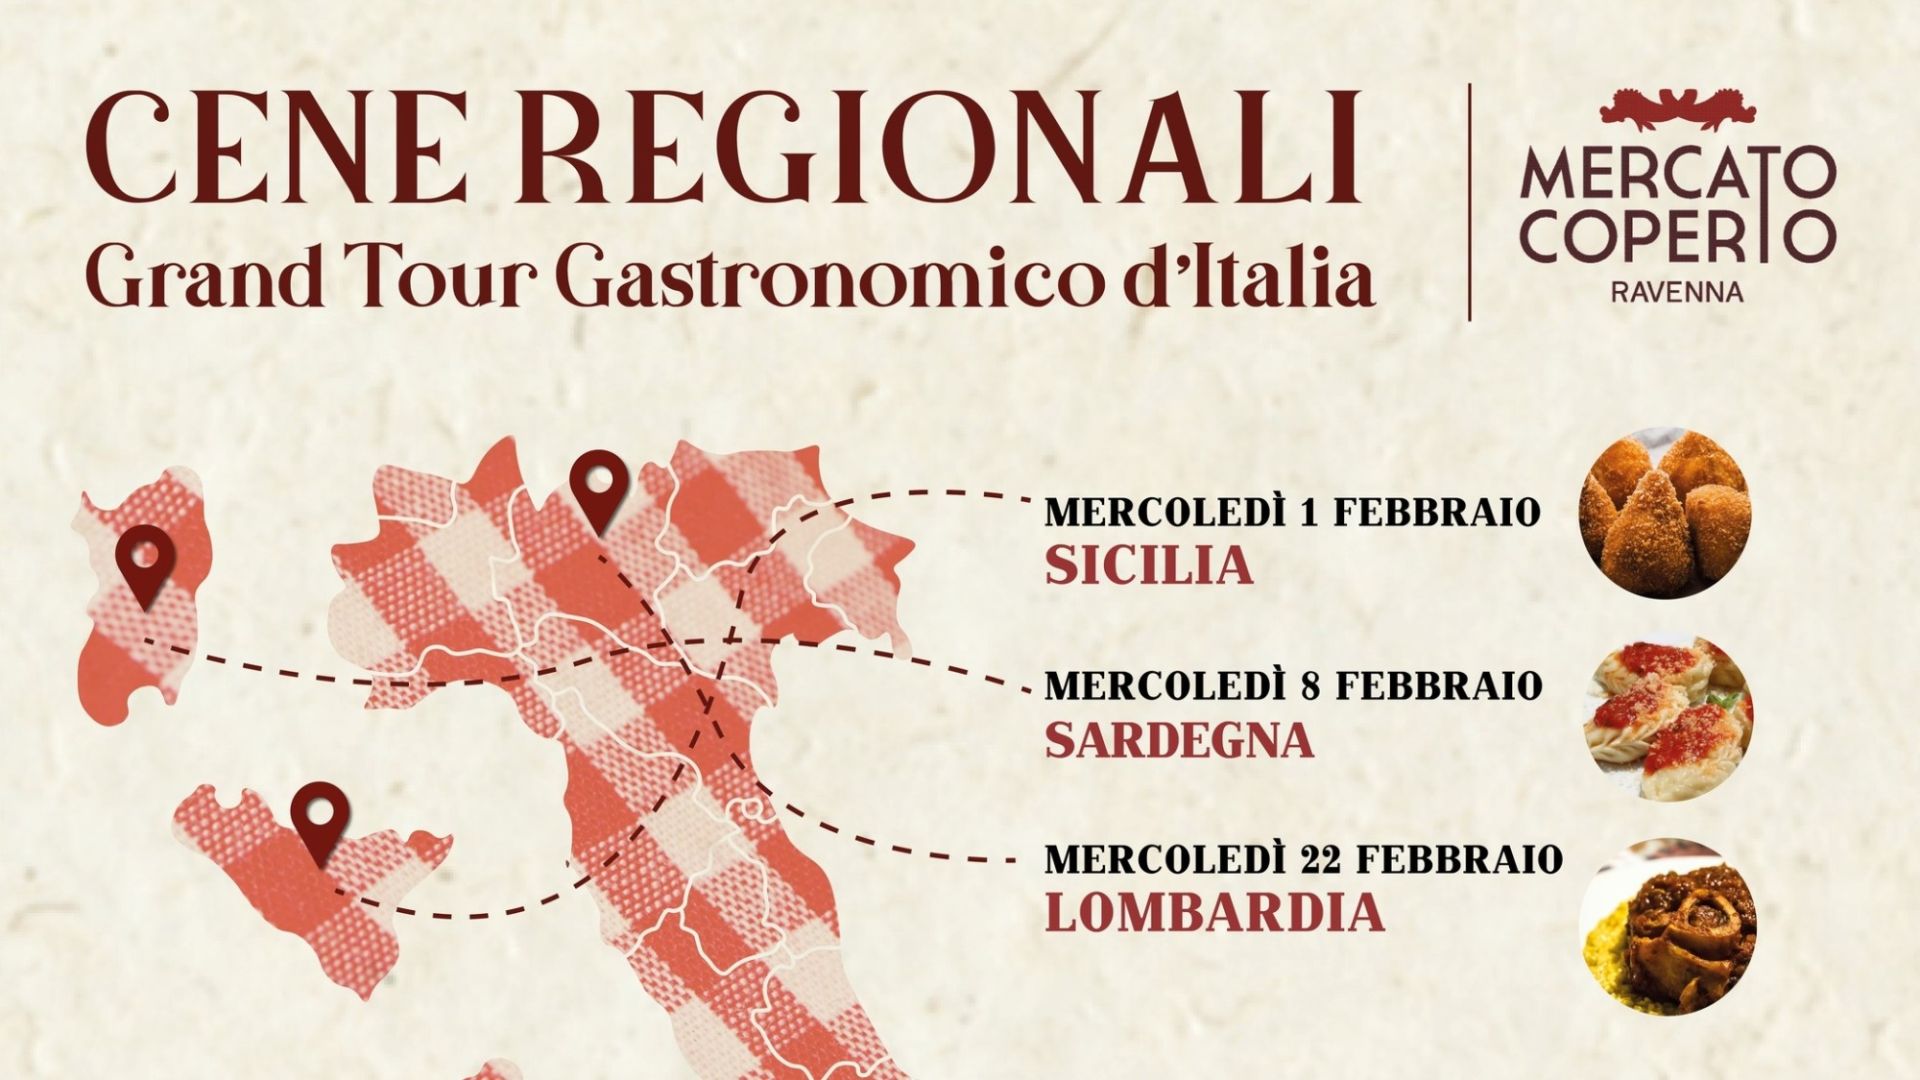 Cene Regionali - Grand Tour gastronomico d'Italia